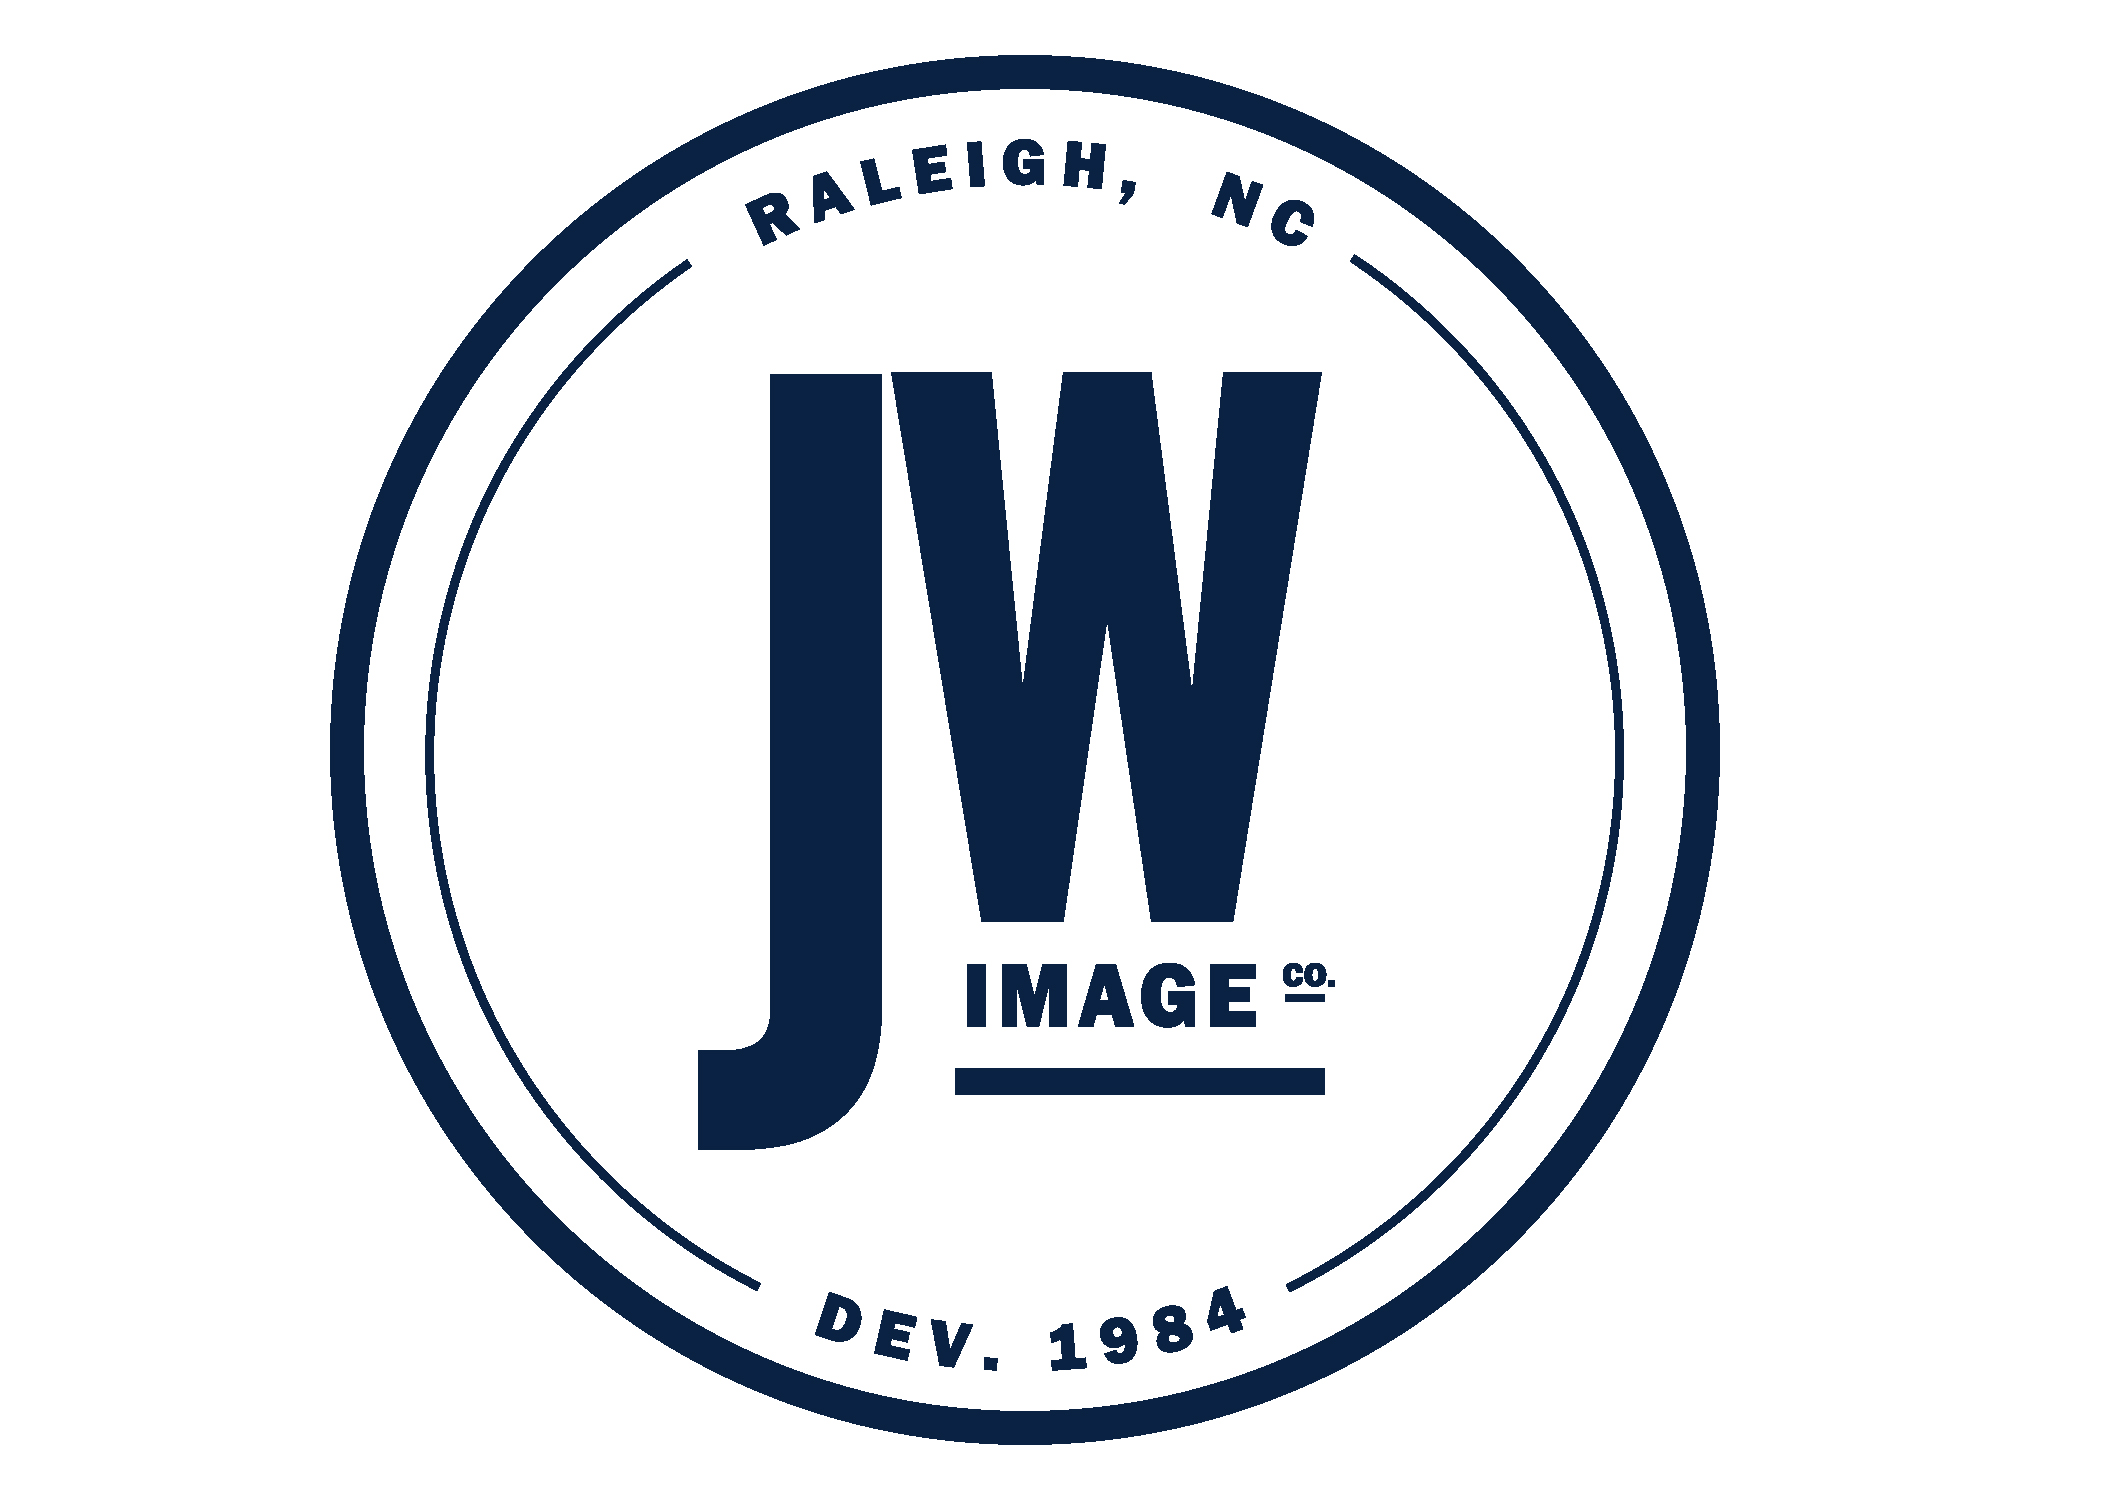 JW Image Co.